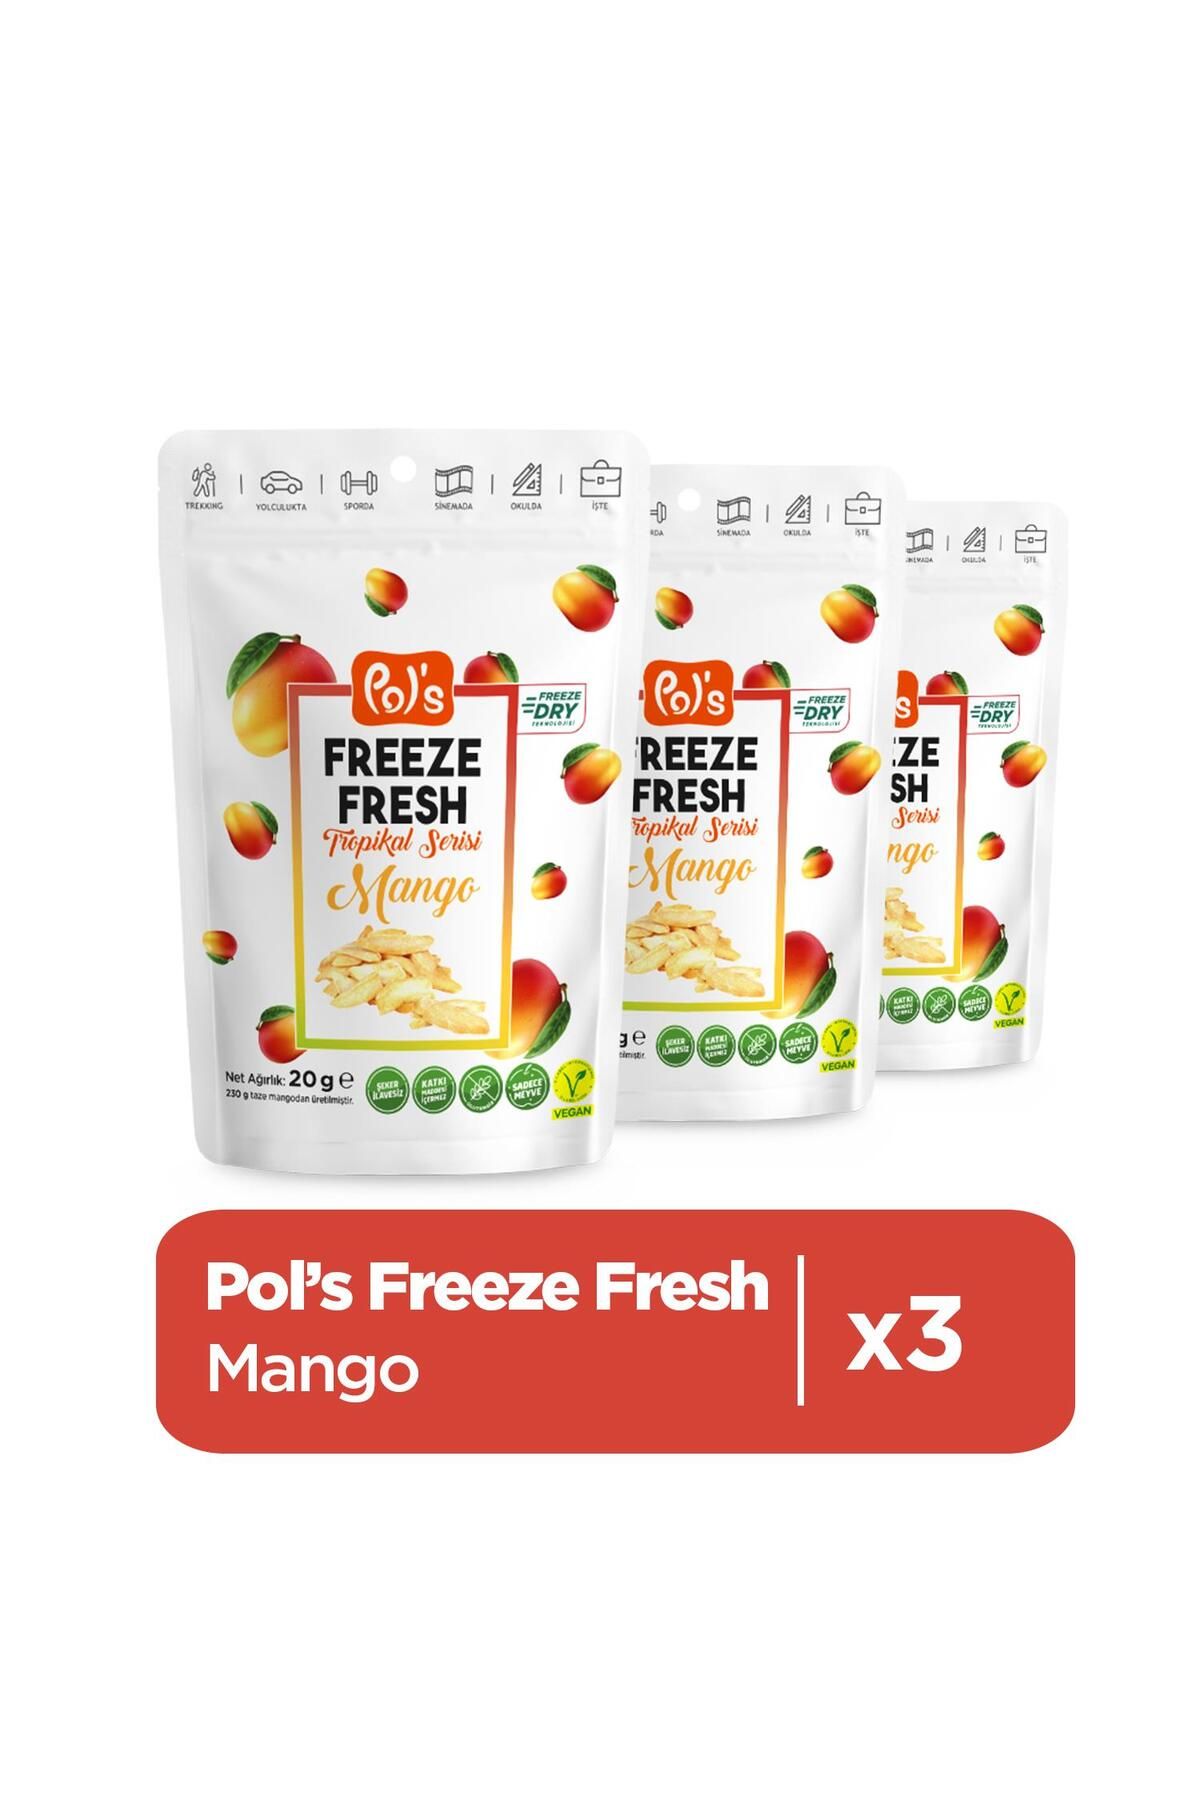 Pol's Freeze Fresh Mango 20 gr X3 Adet Freeze Dry Dondurularak Kurutulmuş Meyve